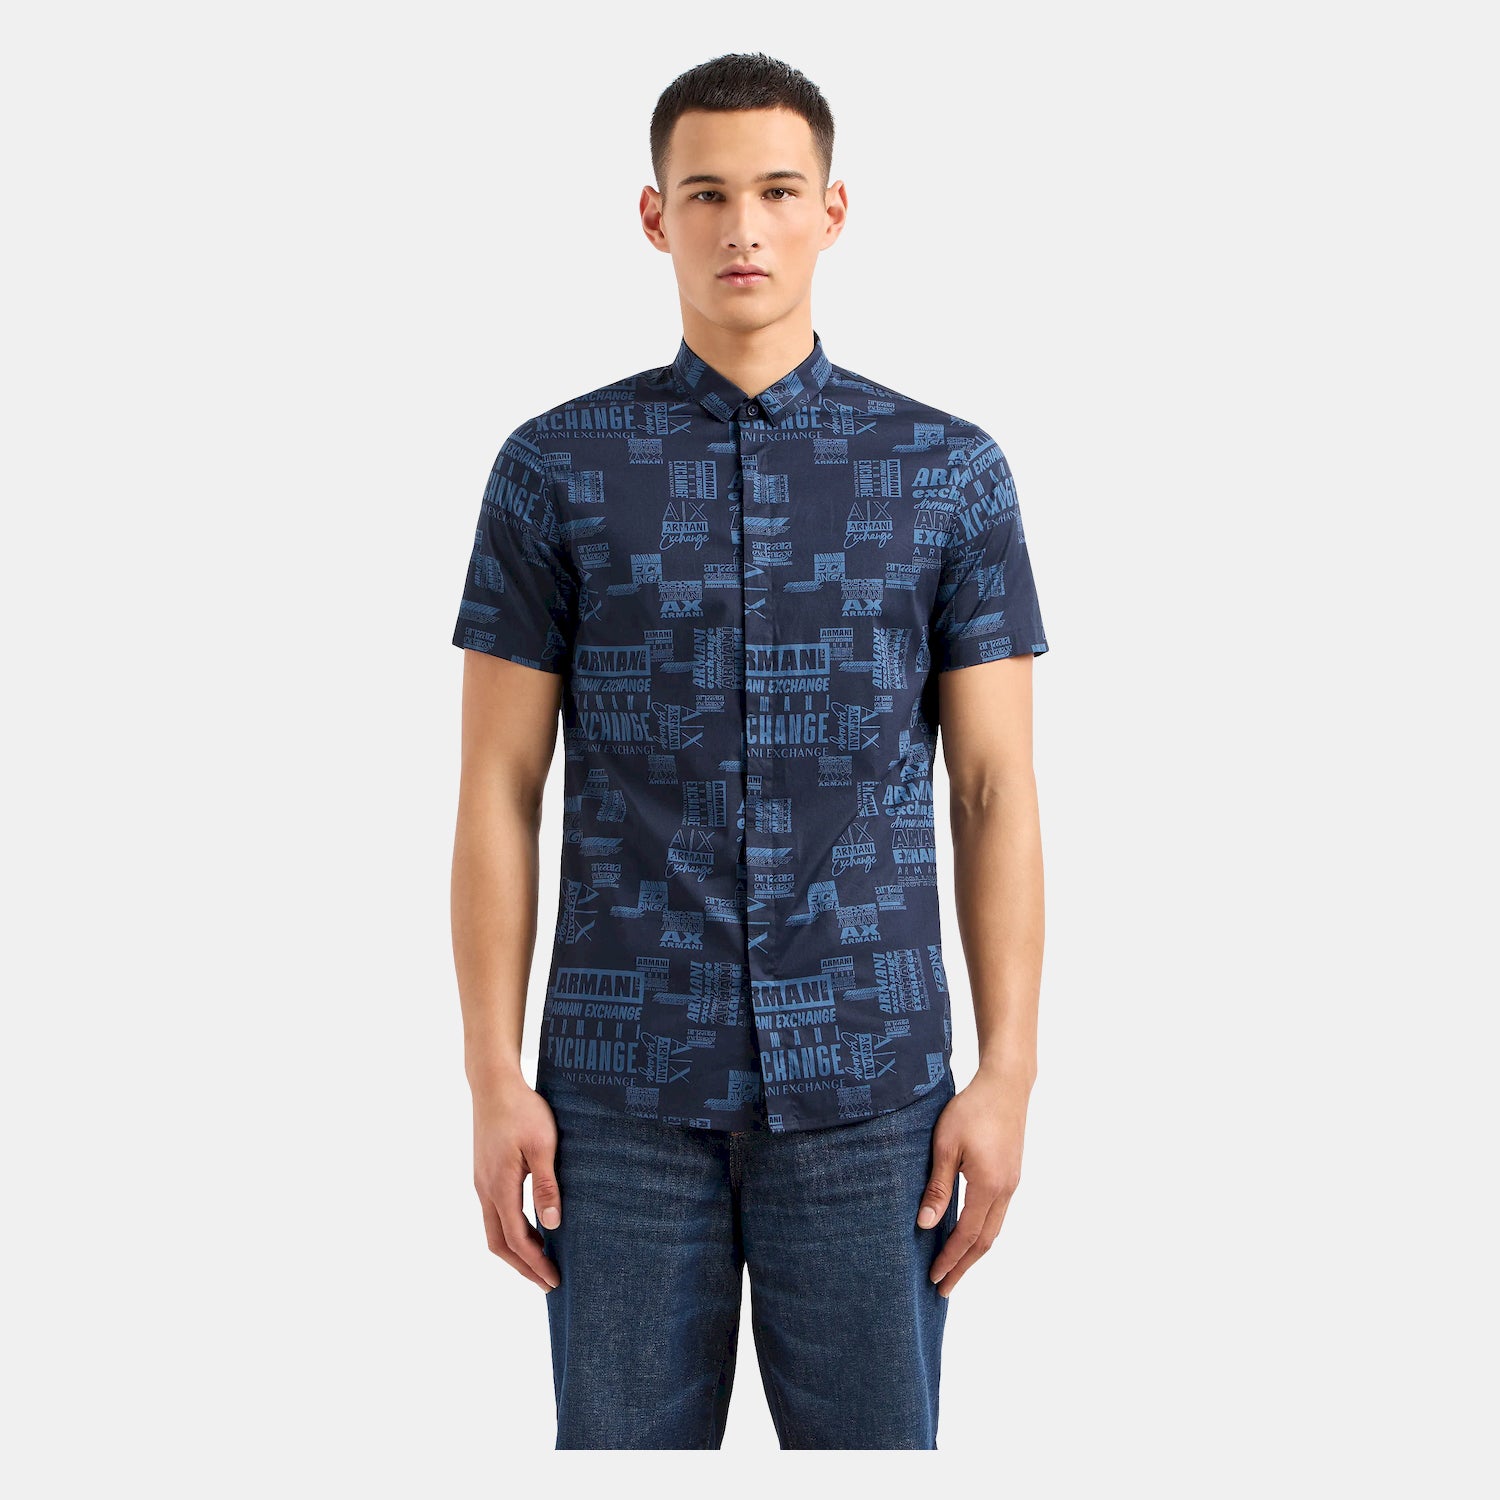 Armani Camisa  Shirt 3dzc04 Zneaz Navy Blue Navy Blue_shot6